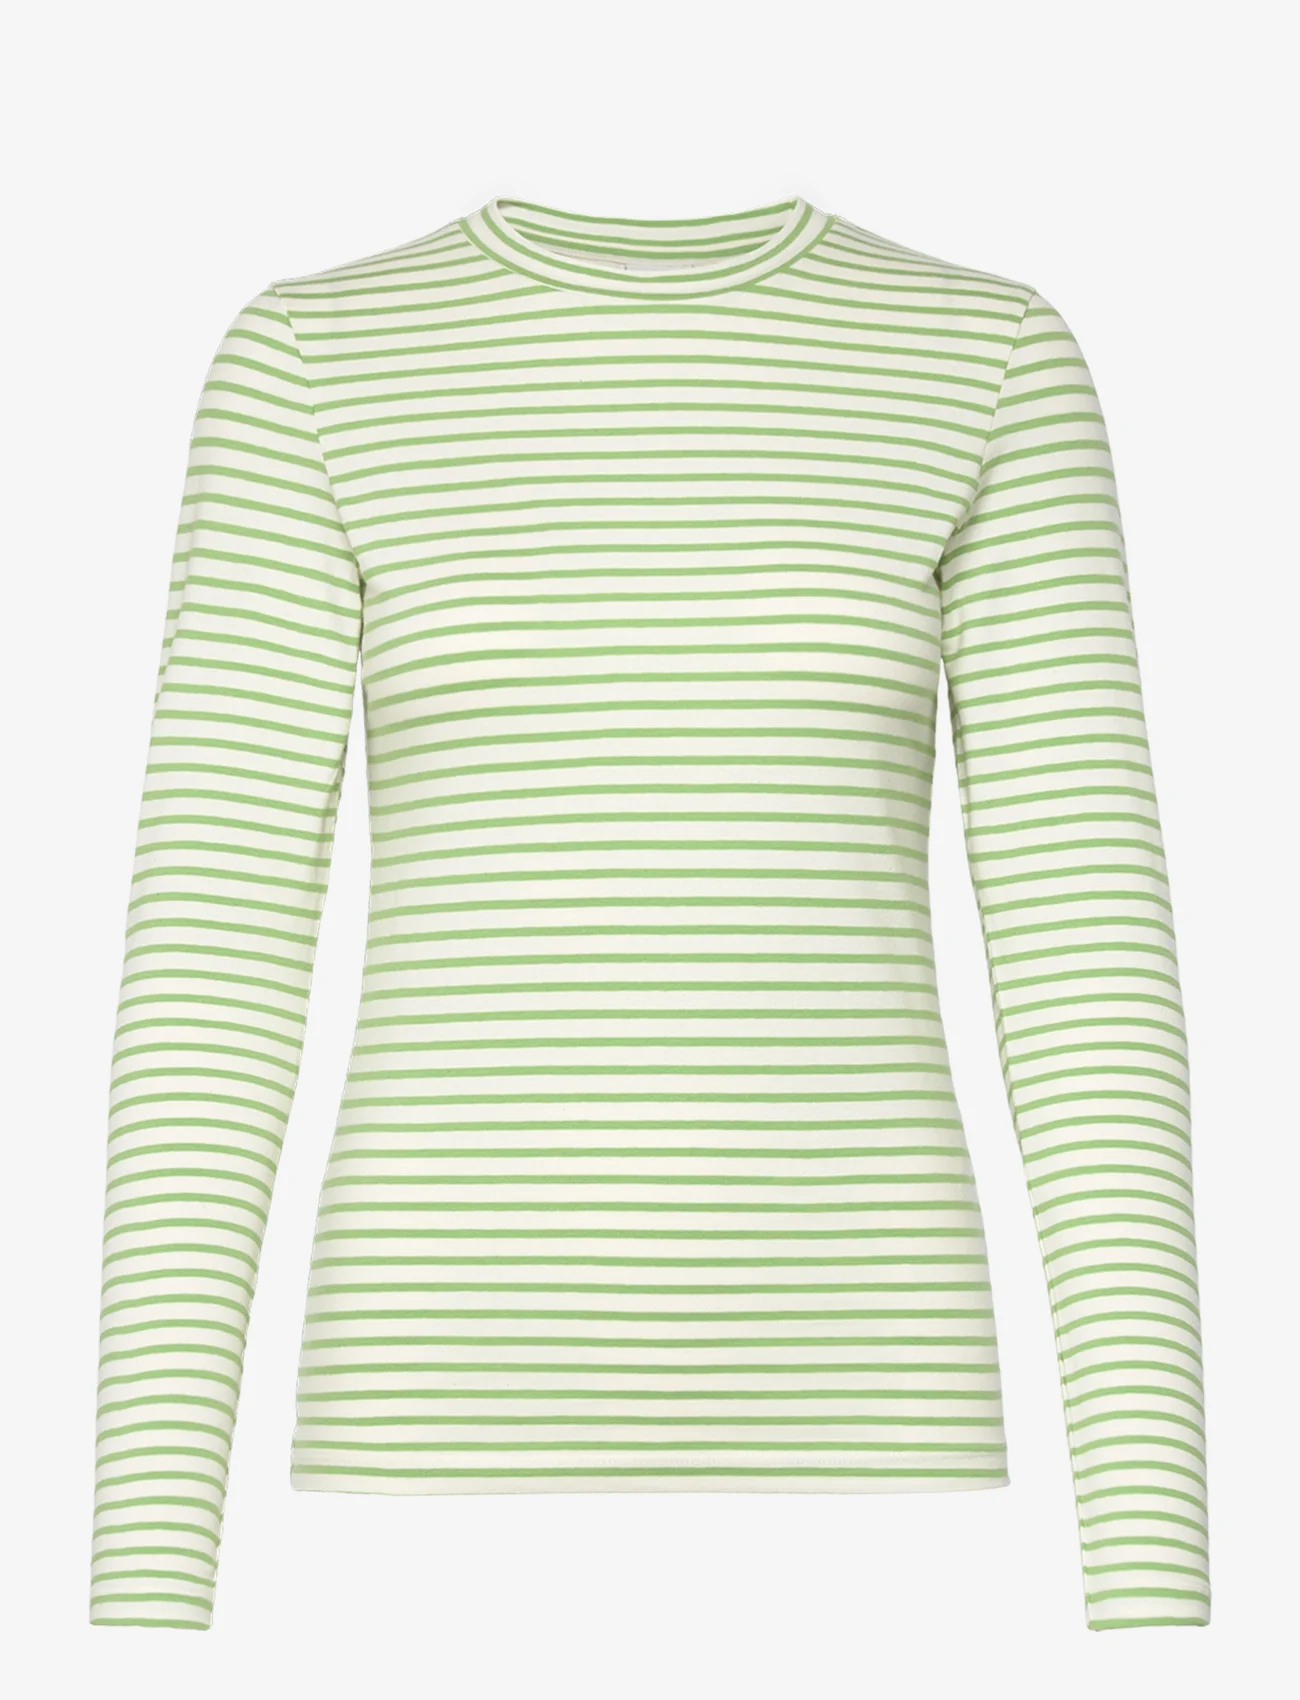 ICHI - IHMIRA LS - langærmede skjorter - green tea stripe - 0